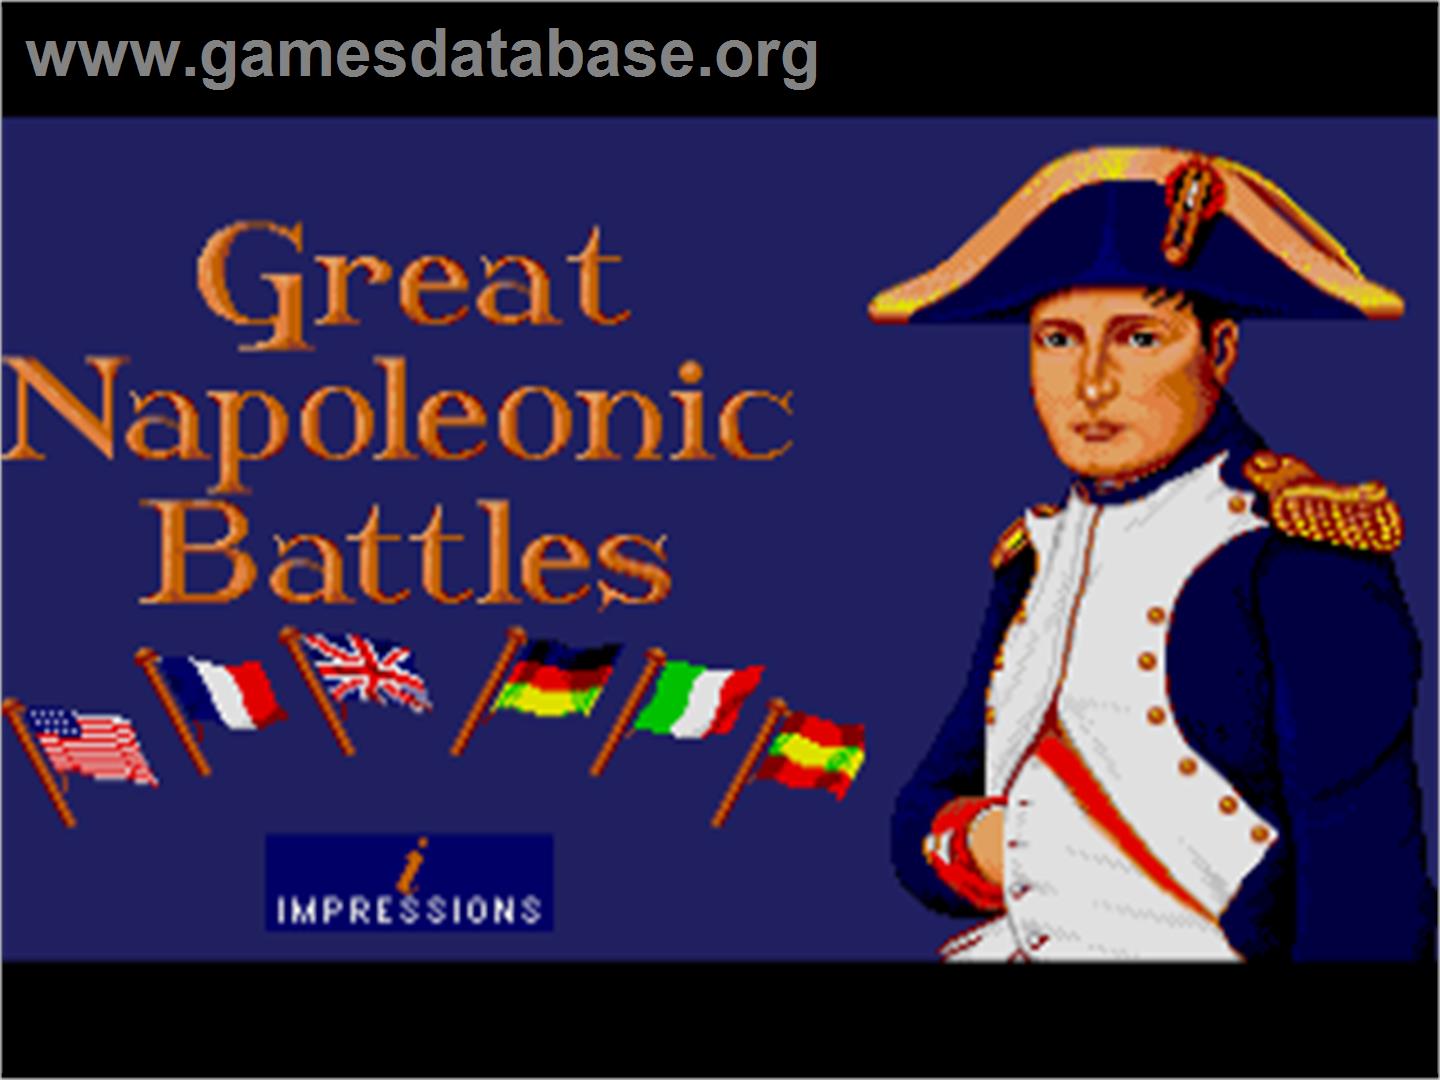 Great Napoleonic Battles - Commodore Amiga - Artwork - Title Screen